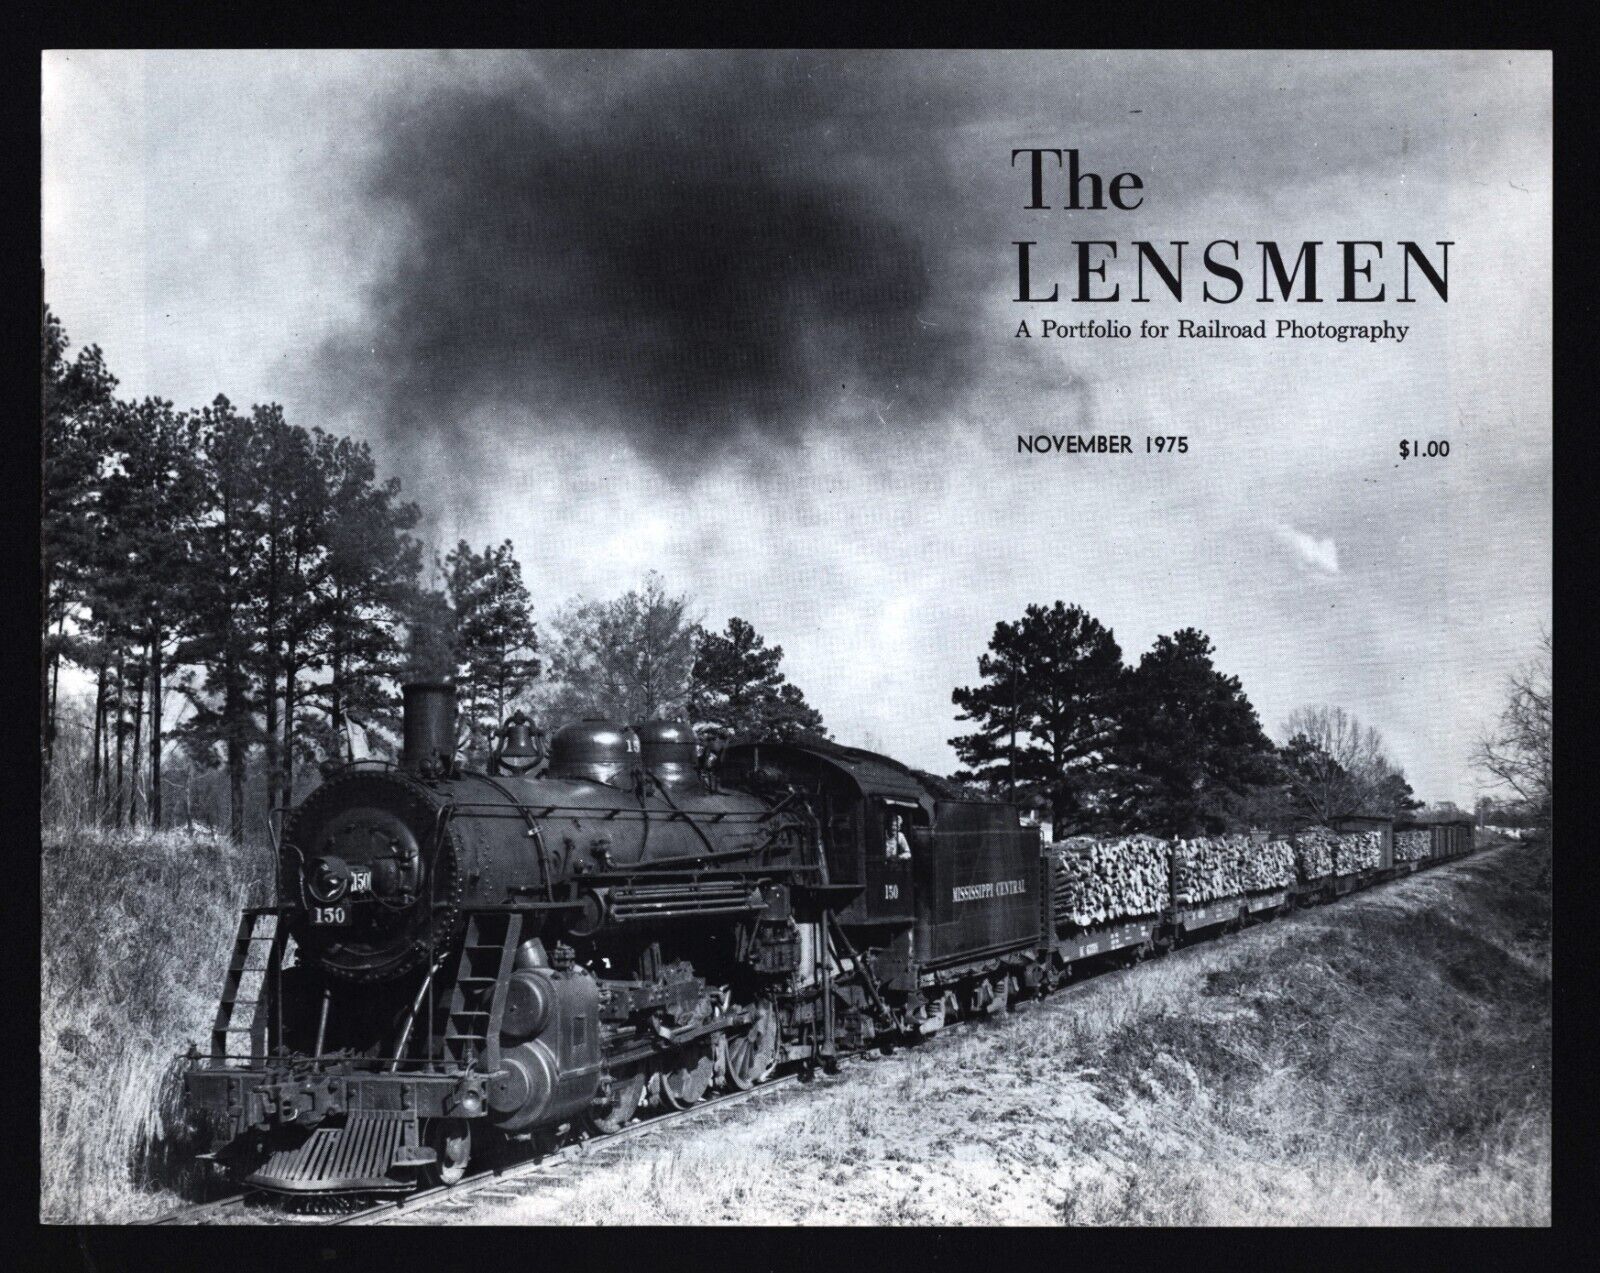 The Lensmen: A Portfolio for Railroad Photography, November 1975